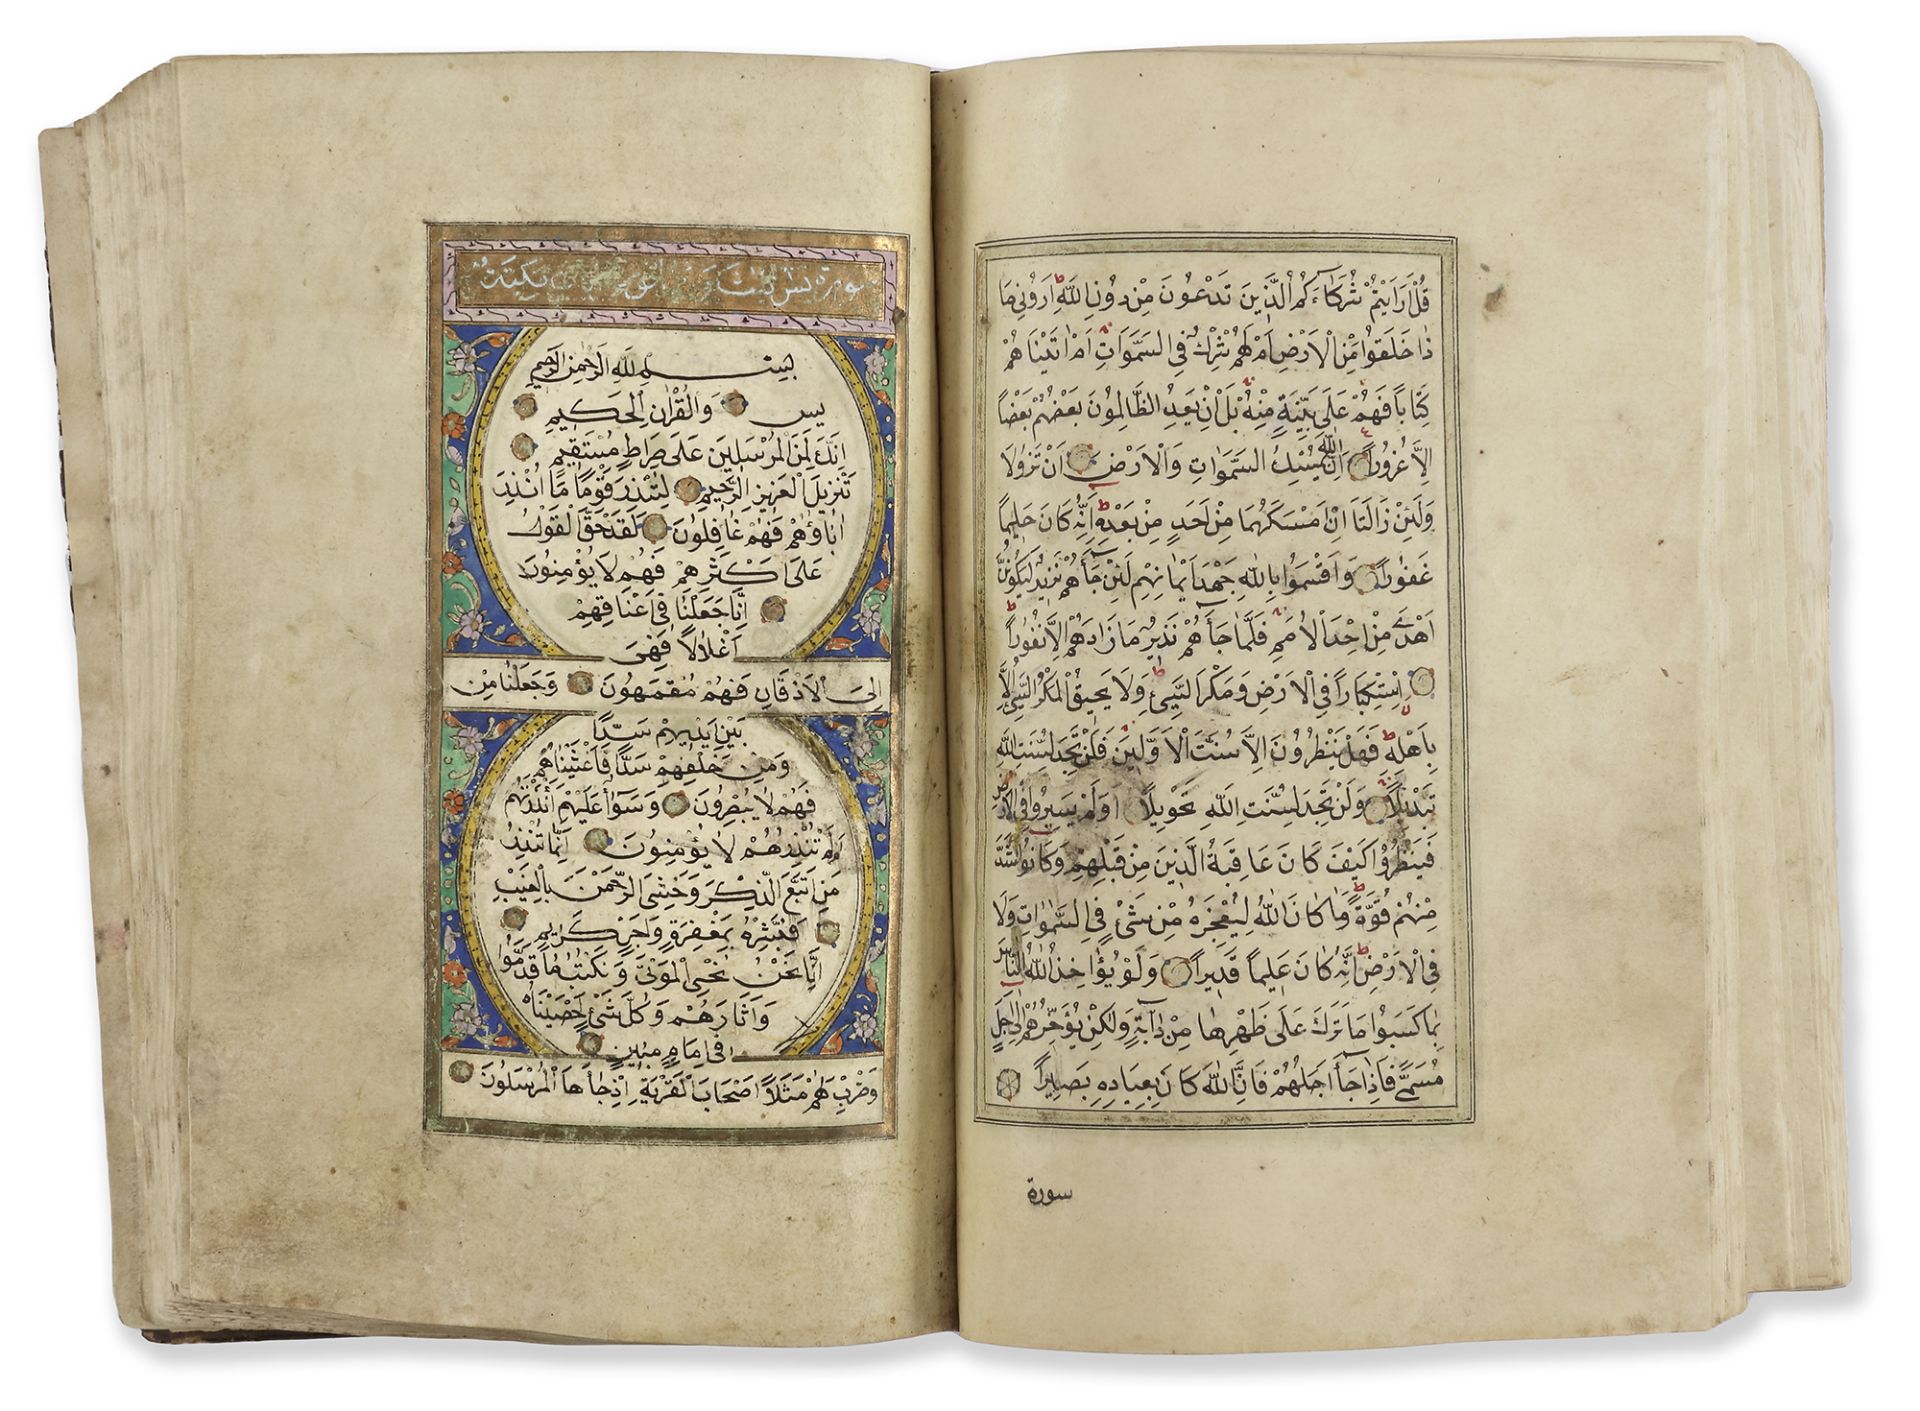 AN ILLUMINATED OTTOMAN QURAN BY MUSTAFA HILMI HACI IBRAHIM EL-ERZINCANI, OTTOMAN TURKEY, DATED 1264 - Image 3 of 7